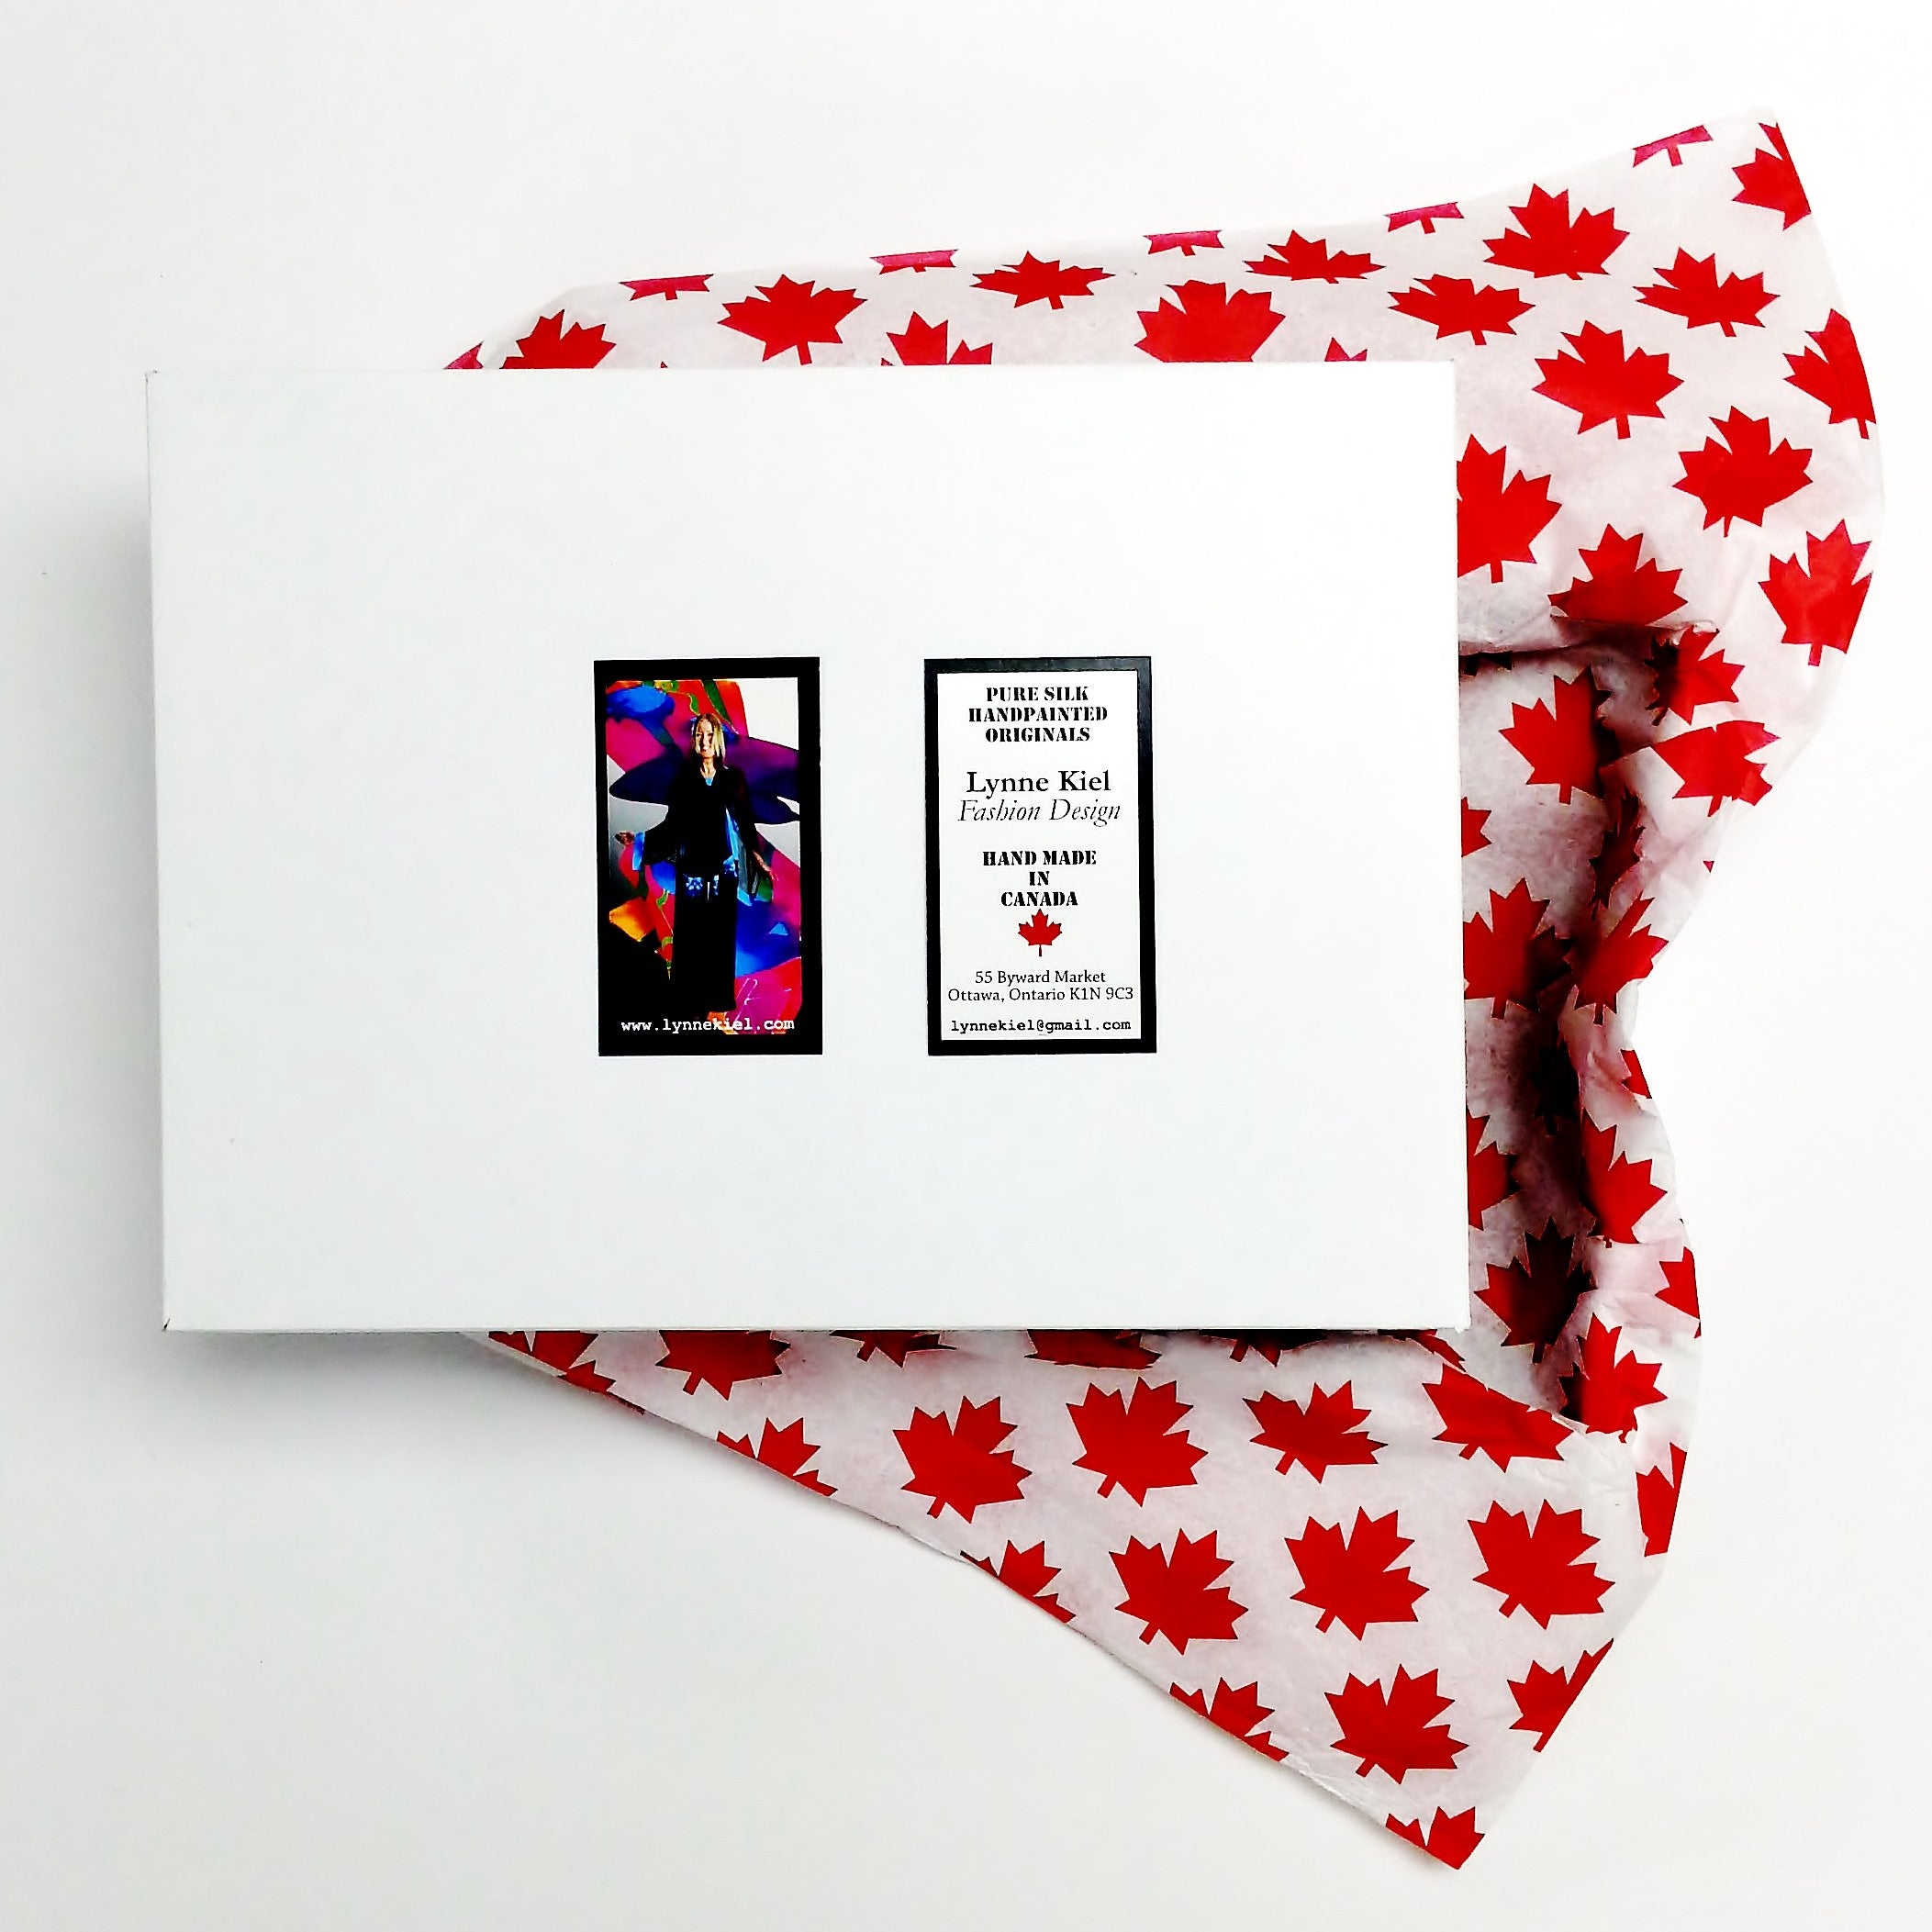 silk scarf gift box made in Canada